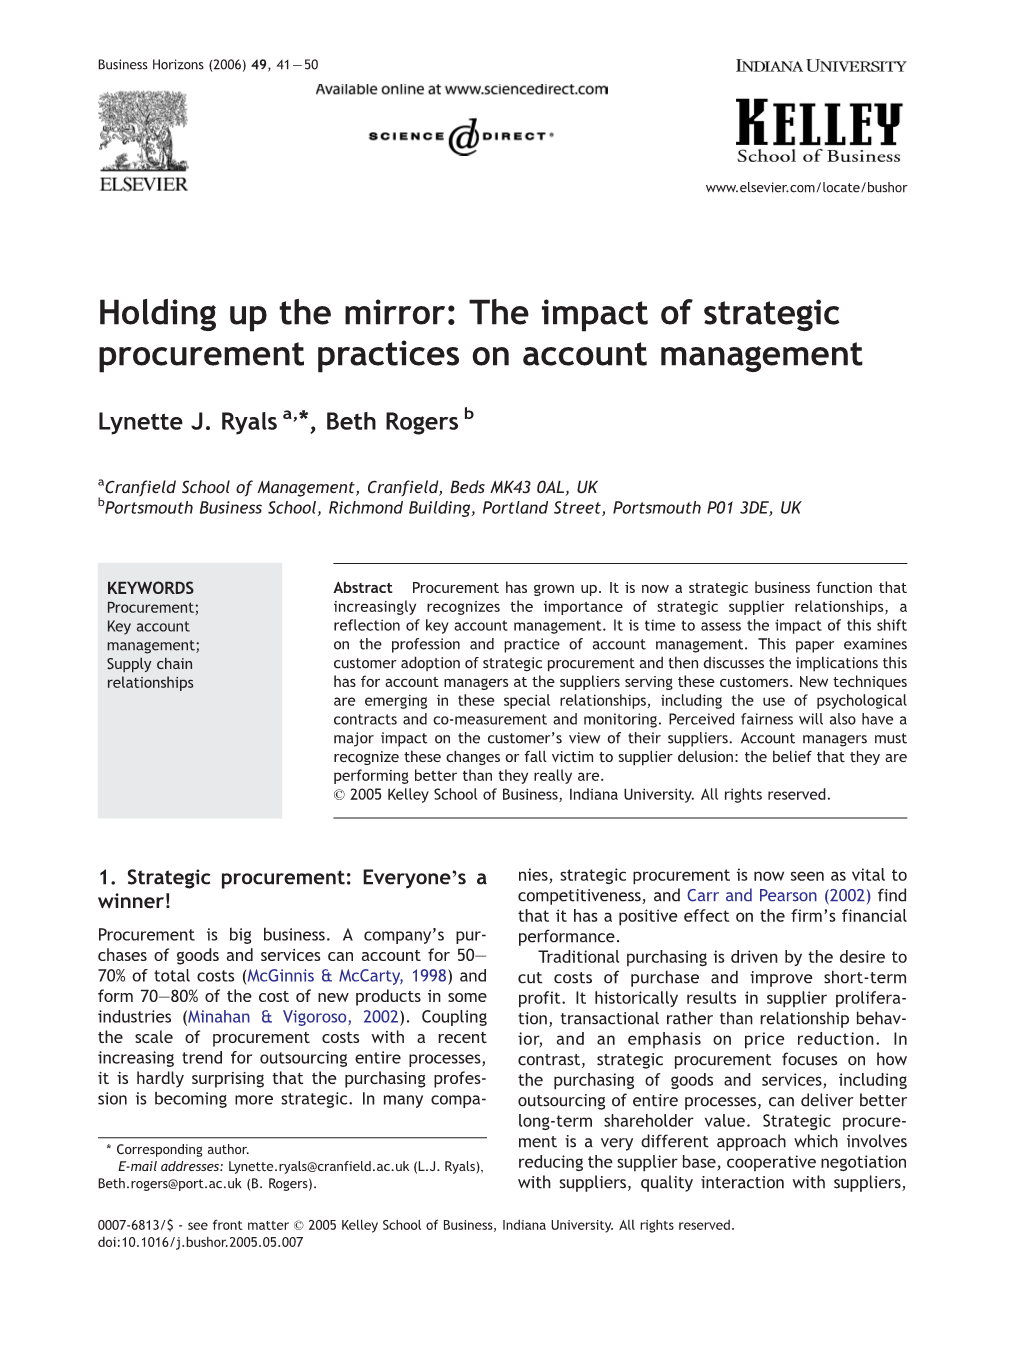 The Impact of Strategic Procurement Practices on Account Management